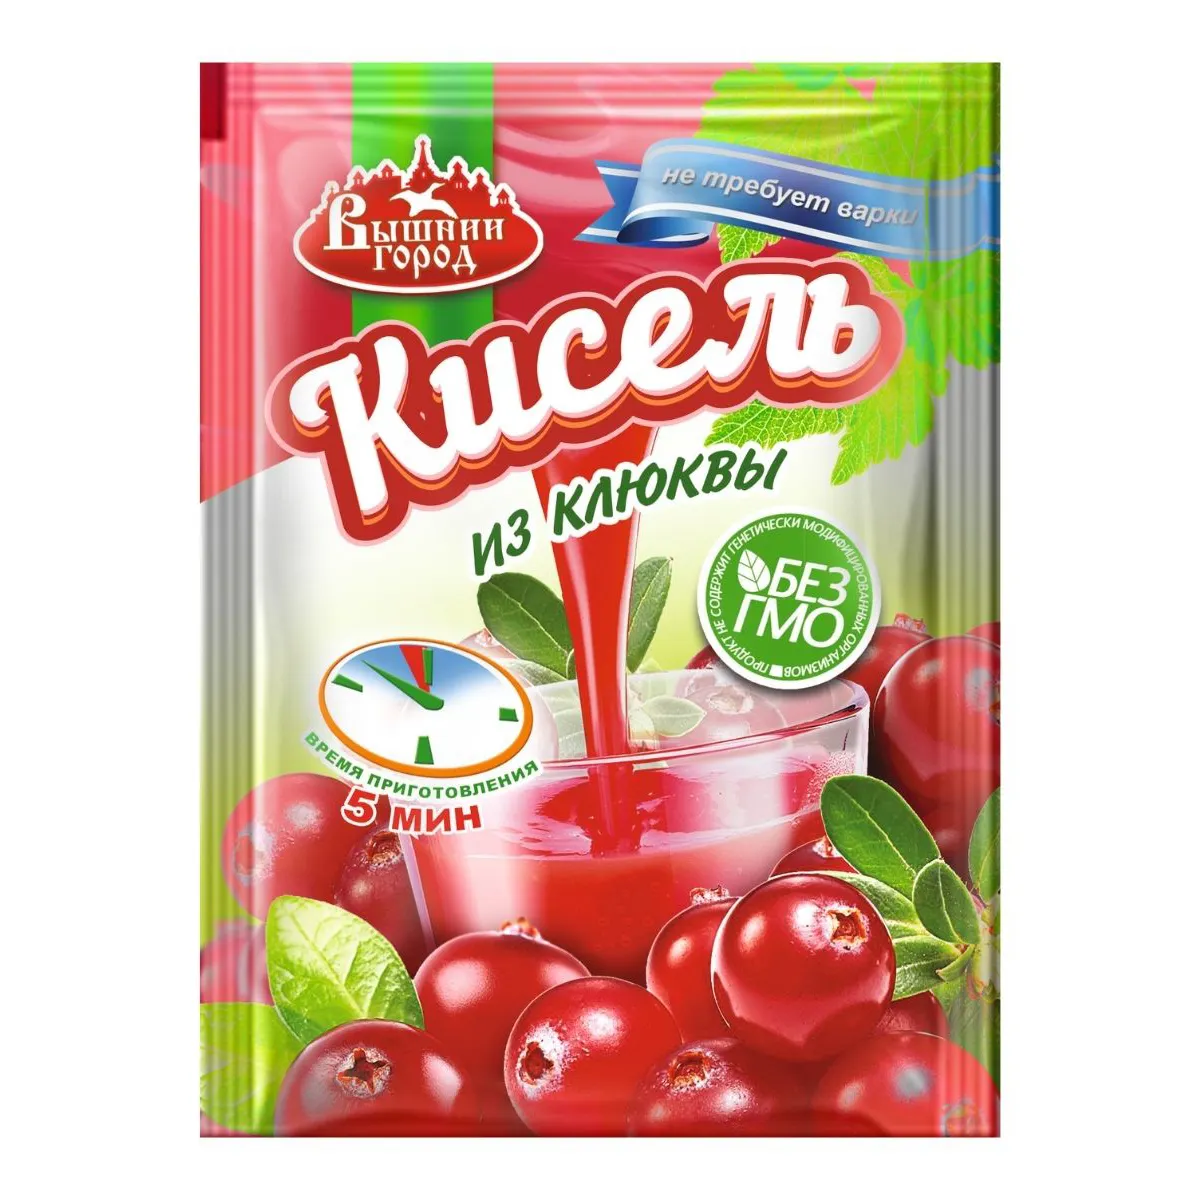 High quality Kissel drink cranberry, food & beverage